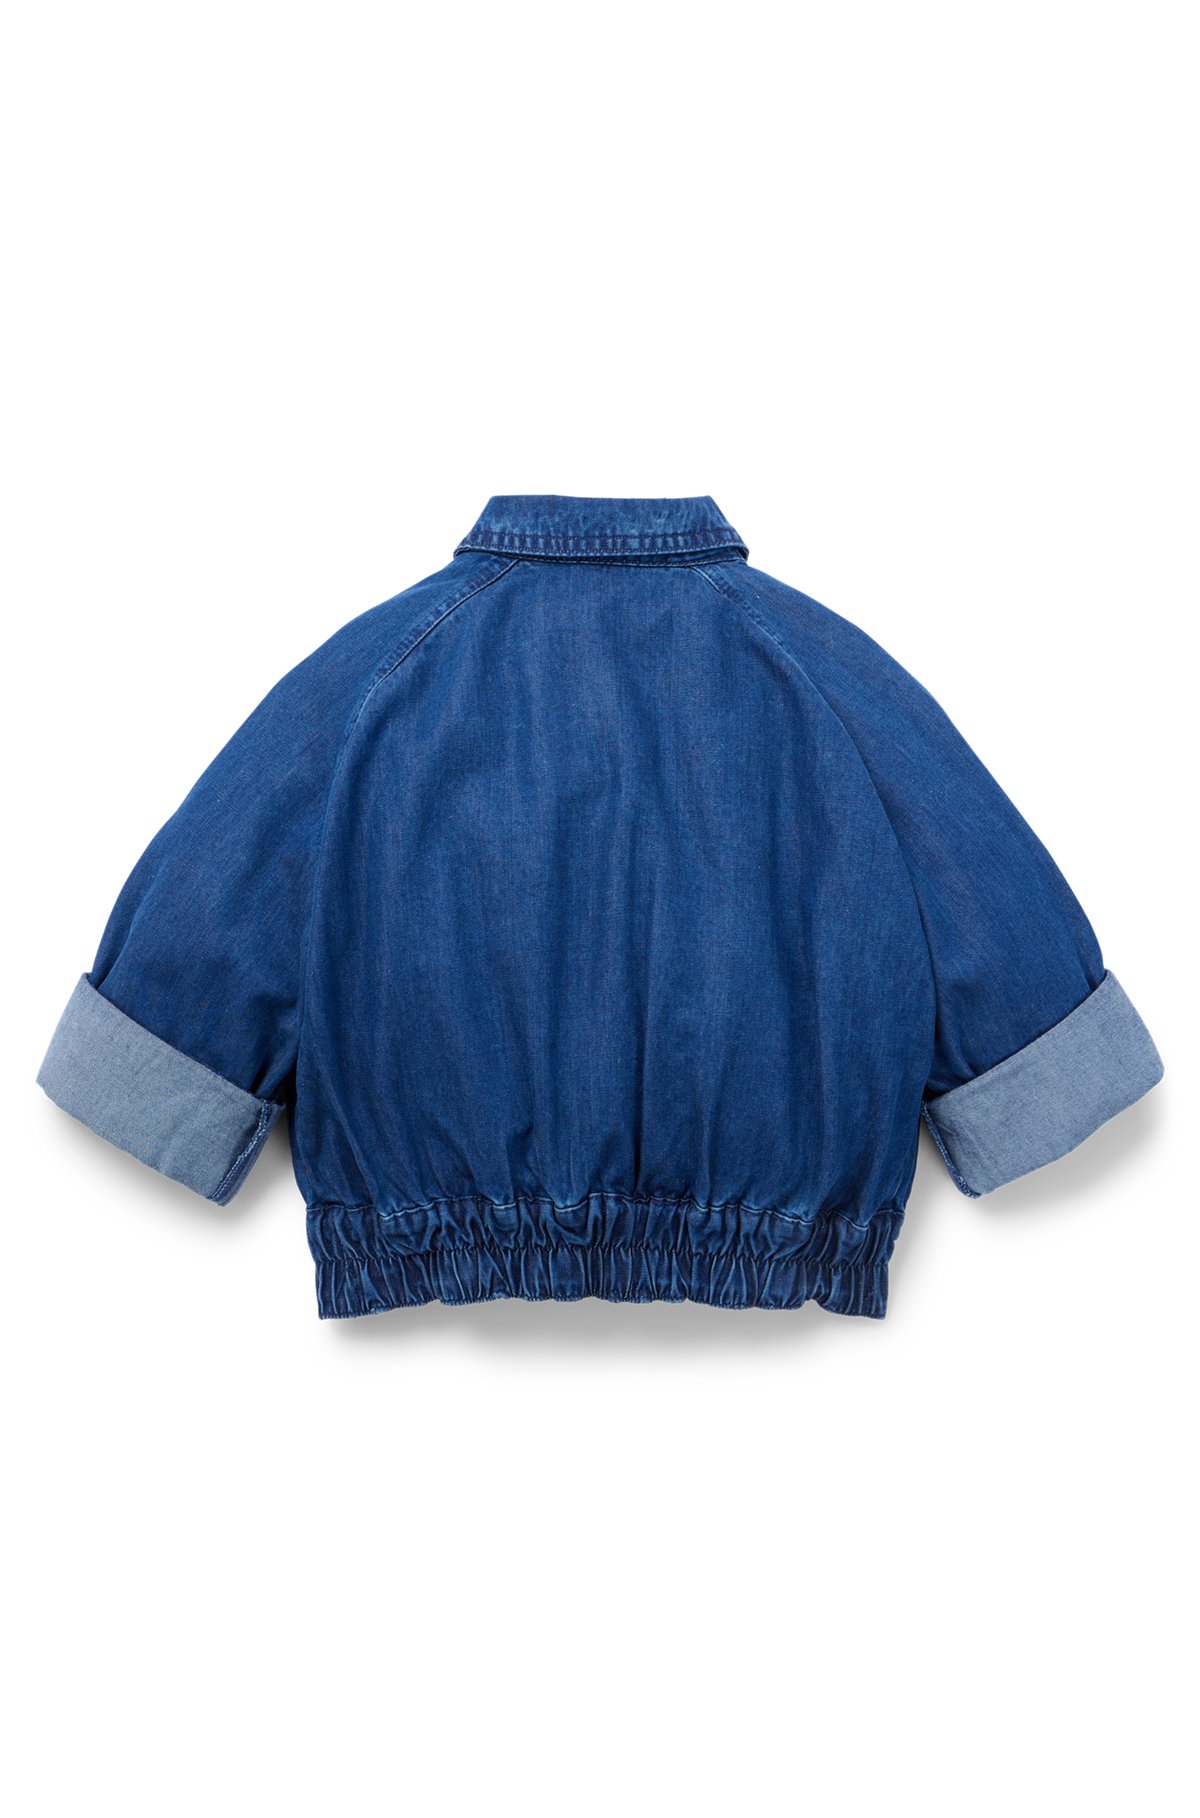 Kids' denim jacket with logo detail, Blue